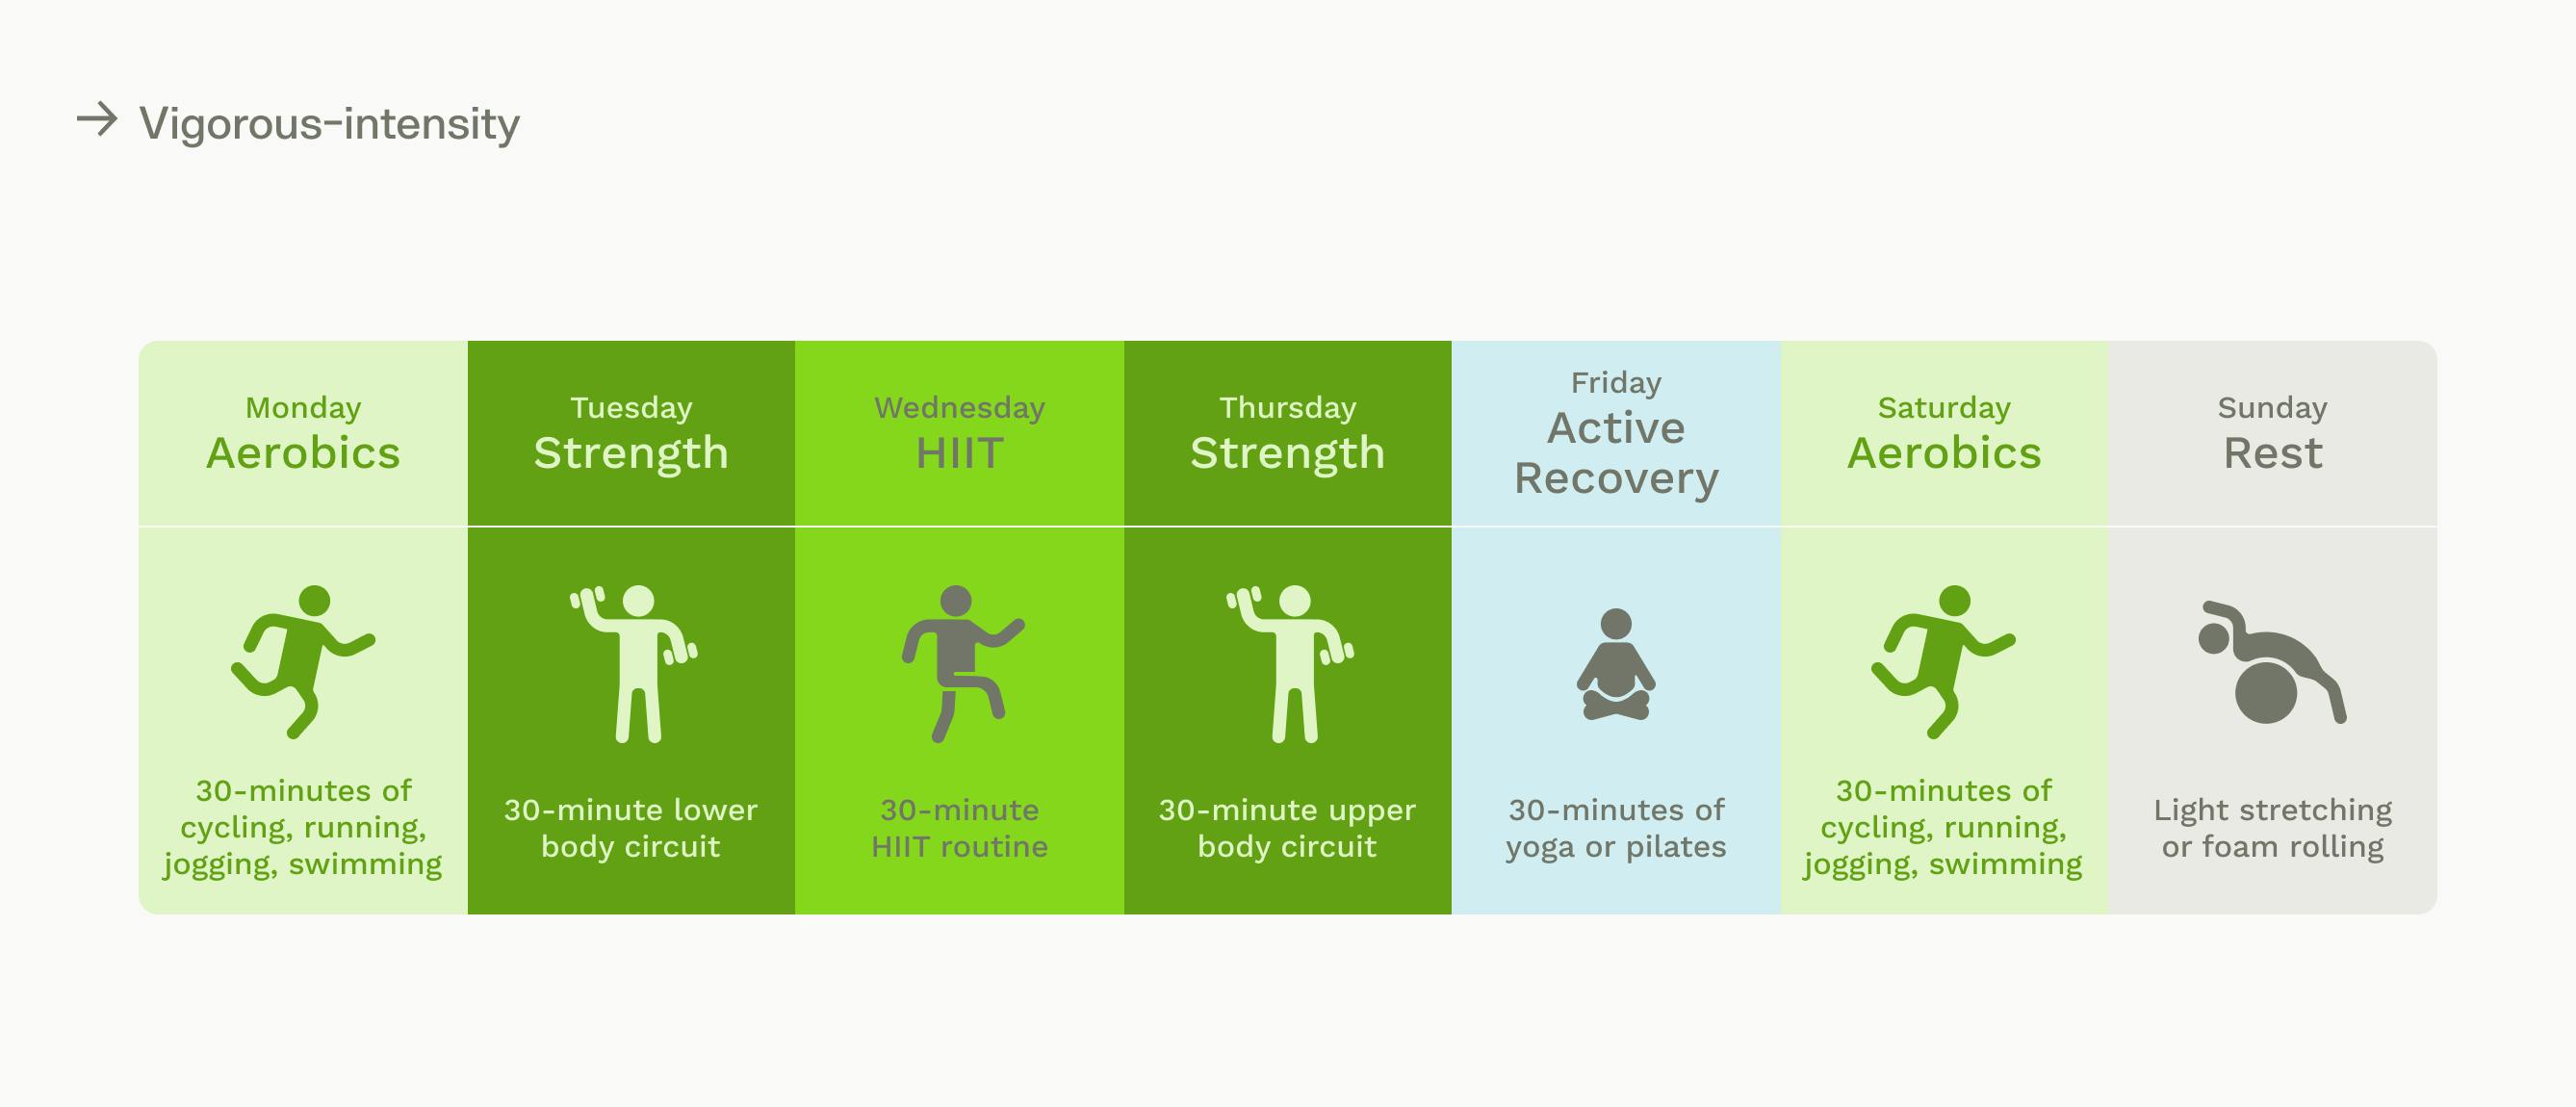 graphic explaining vigorous-intensity workout plan